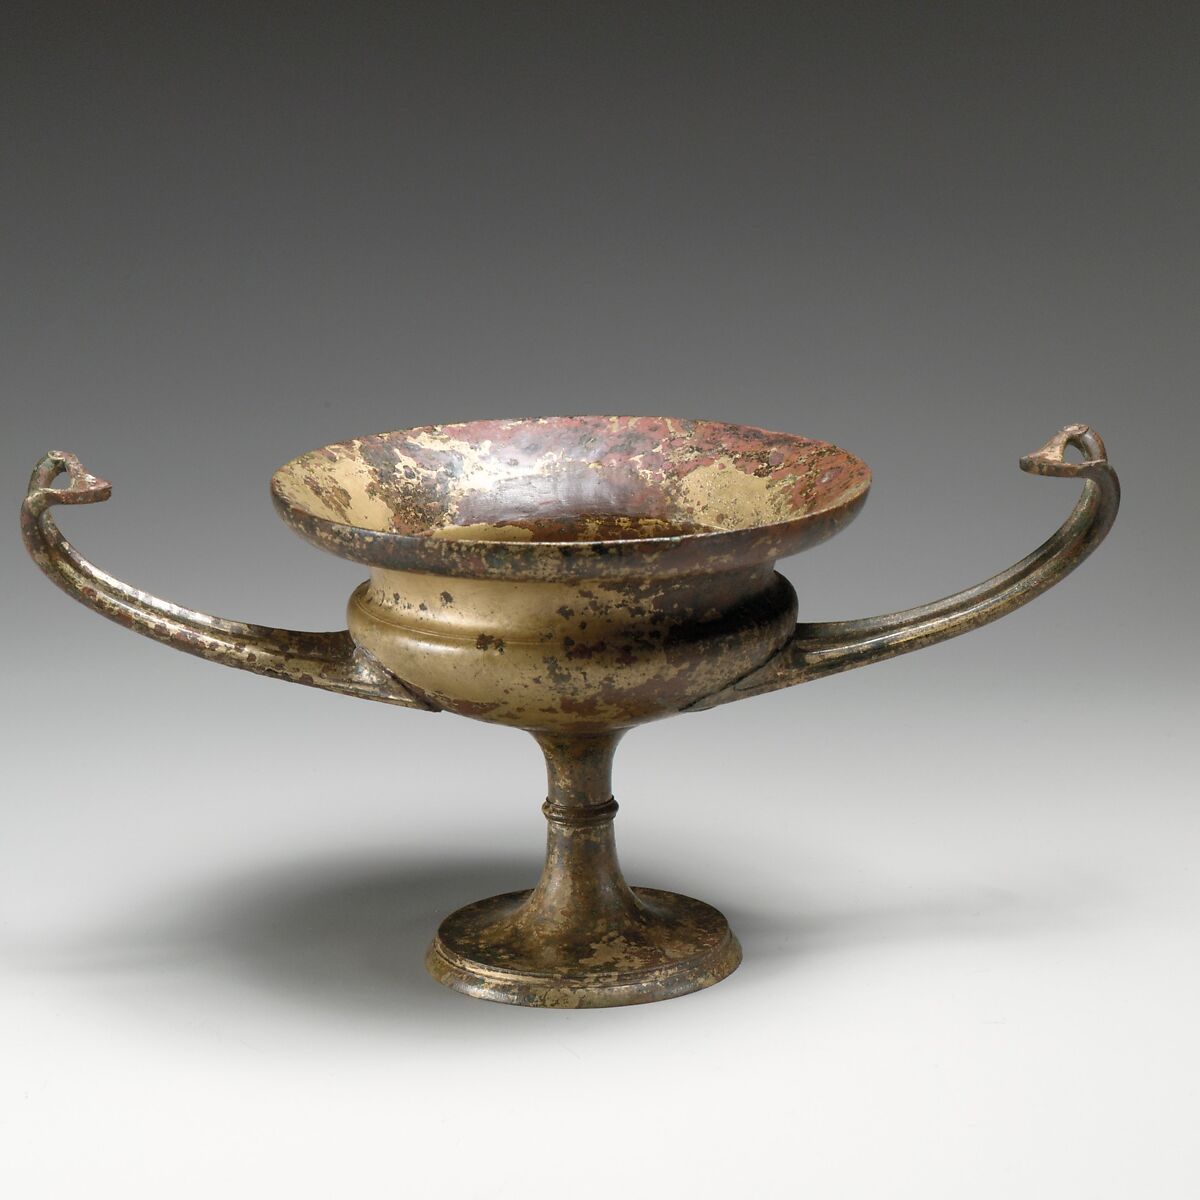 Bronze kylix (drinking cup), Bronze, Greek